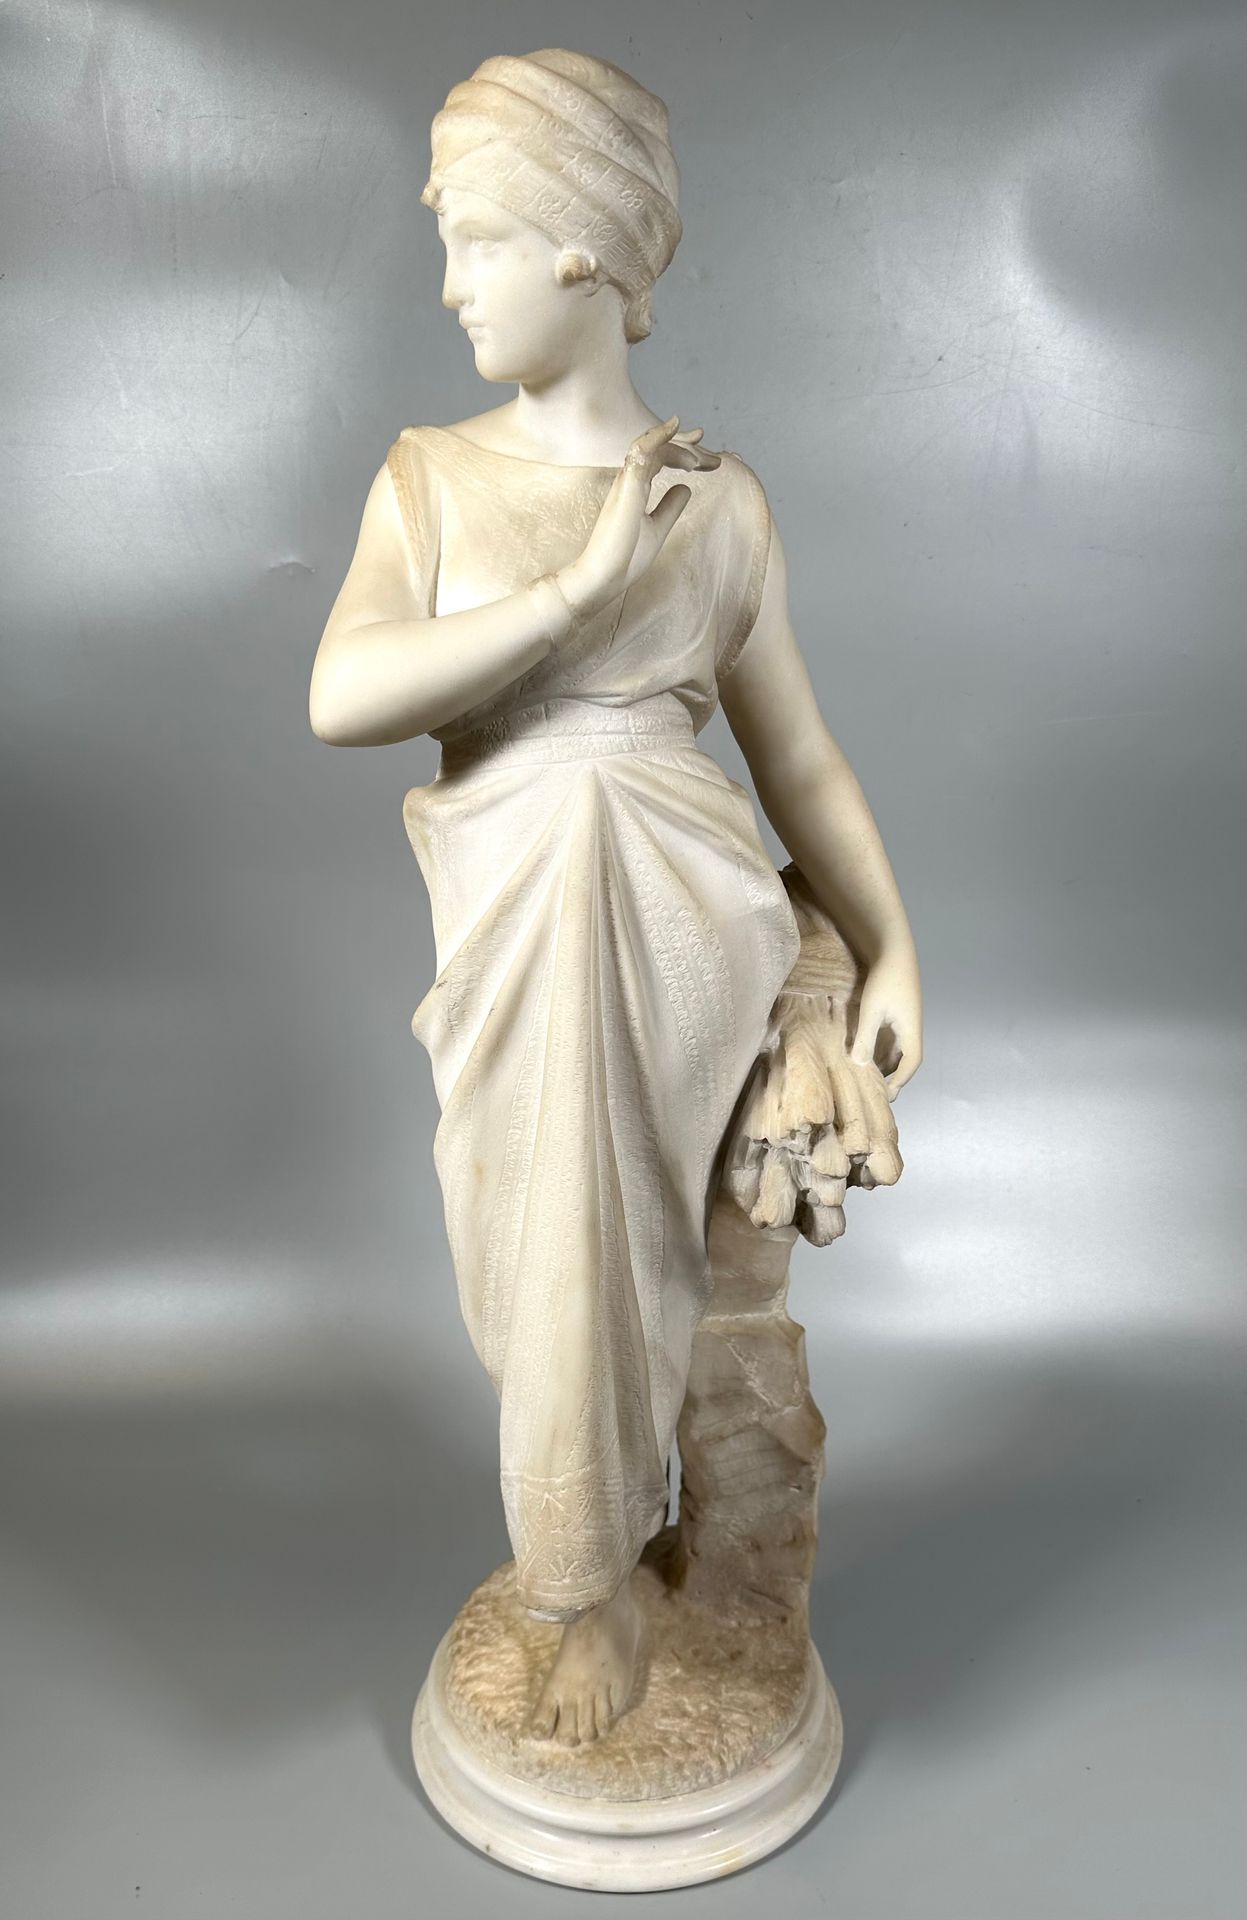 Null Guglielmo PUGI (c.1850-1915)
The gleaner
Sculpture in white marble, signed &hellip;